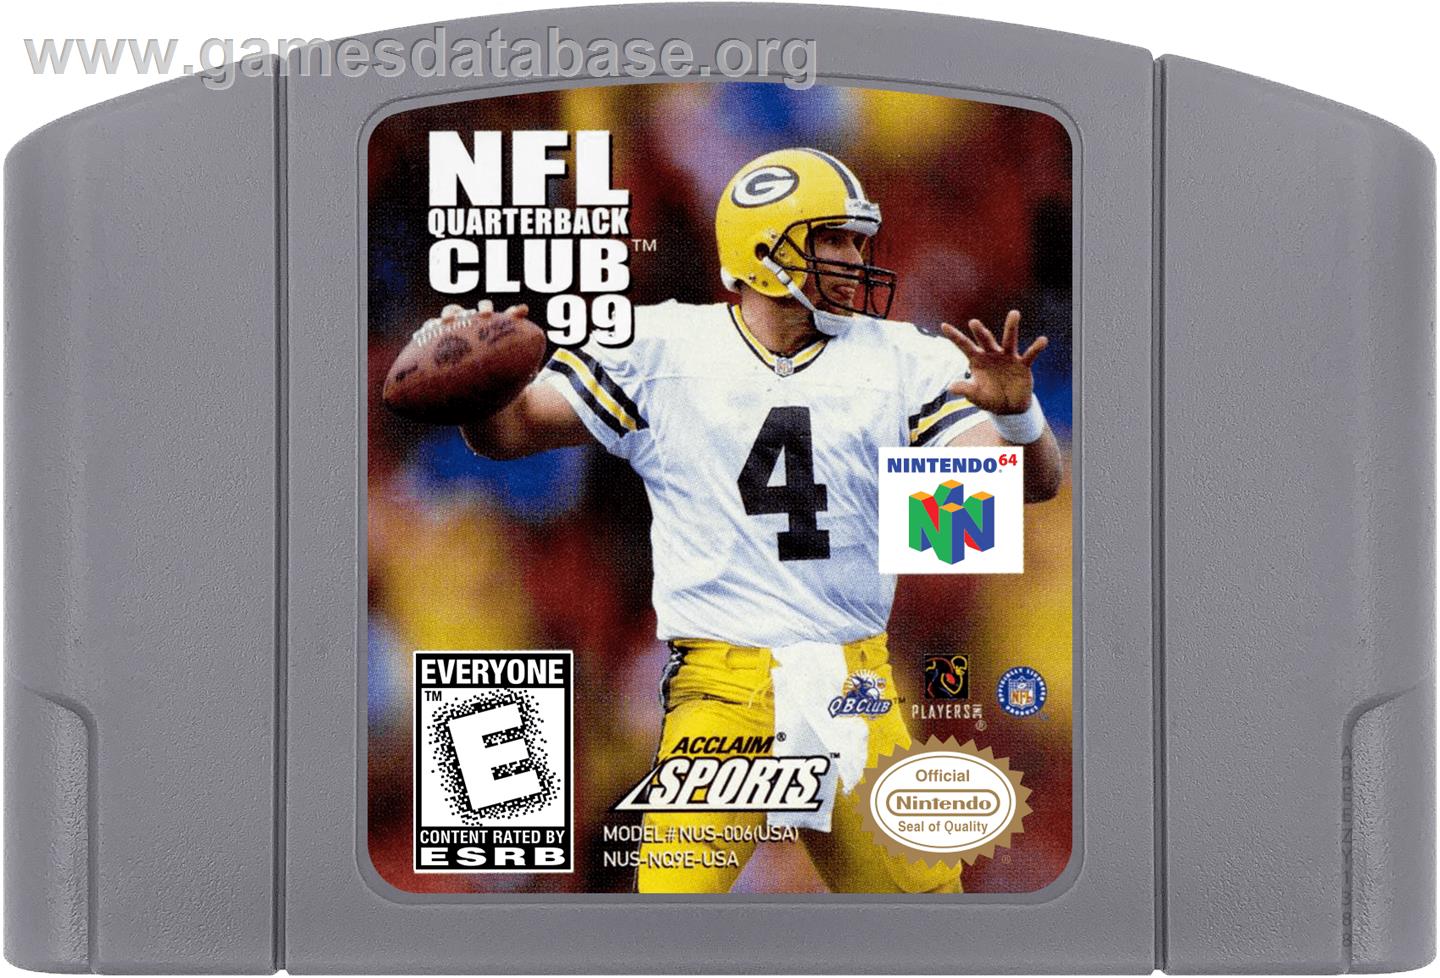 NFL Quarterback Club '99 - Nintendo N64 - Artwork - Cartridge